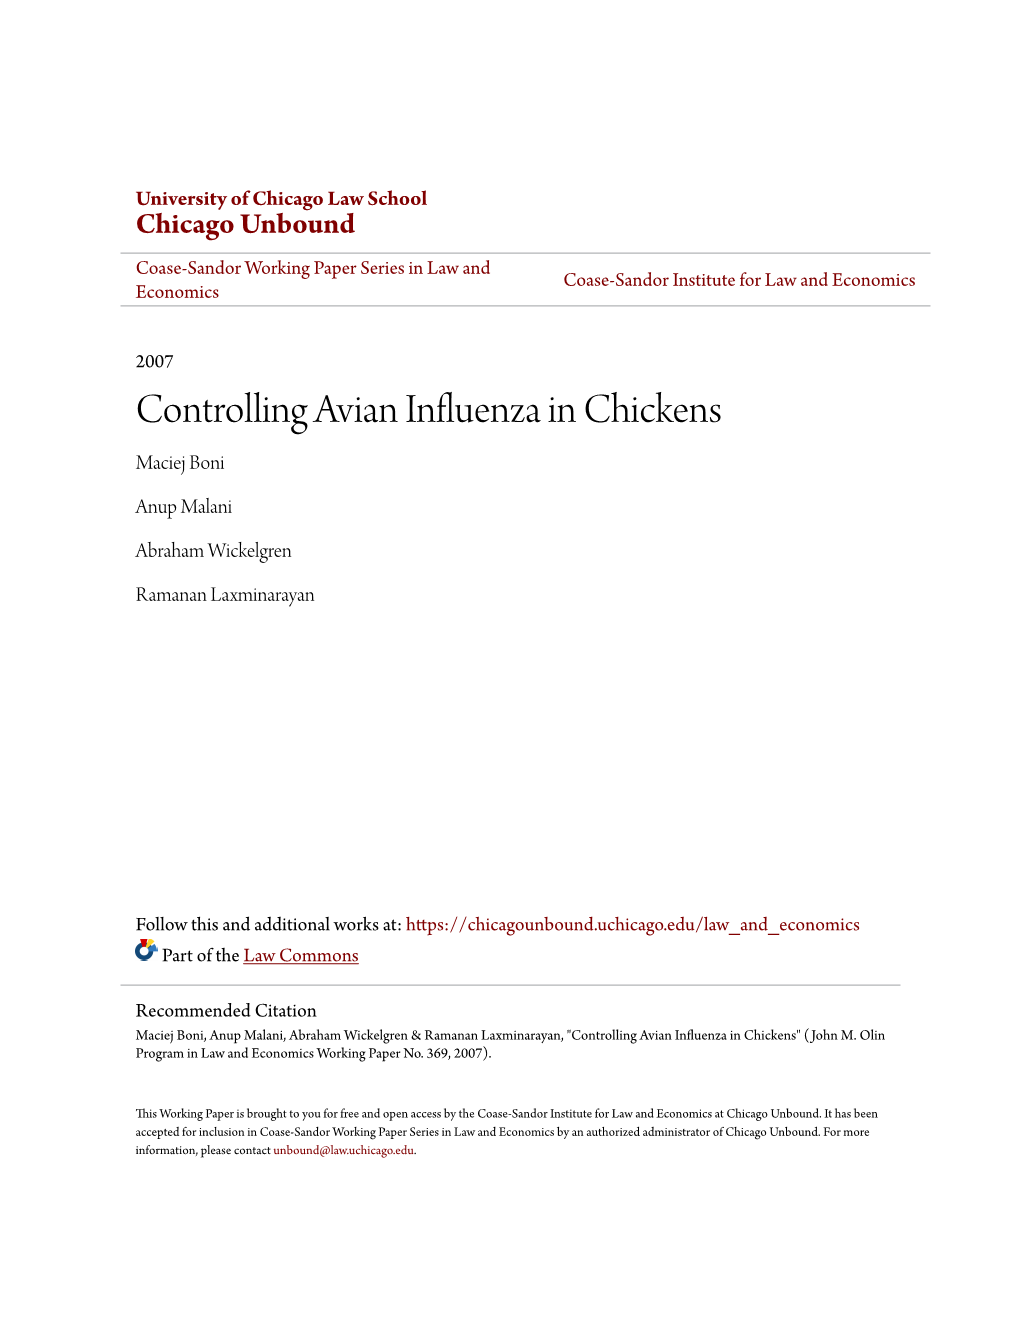 Controlling Avian Influenza in Chickens Maciej Boni